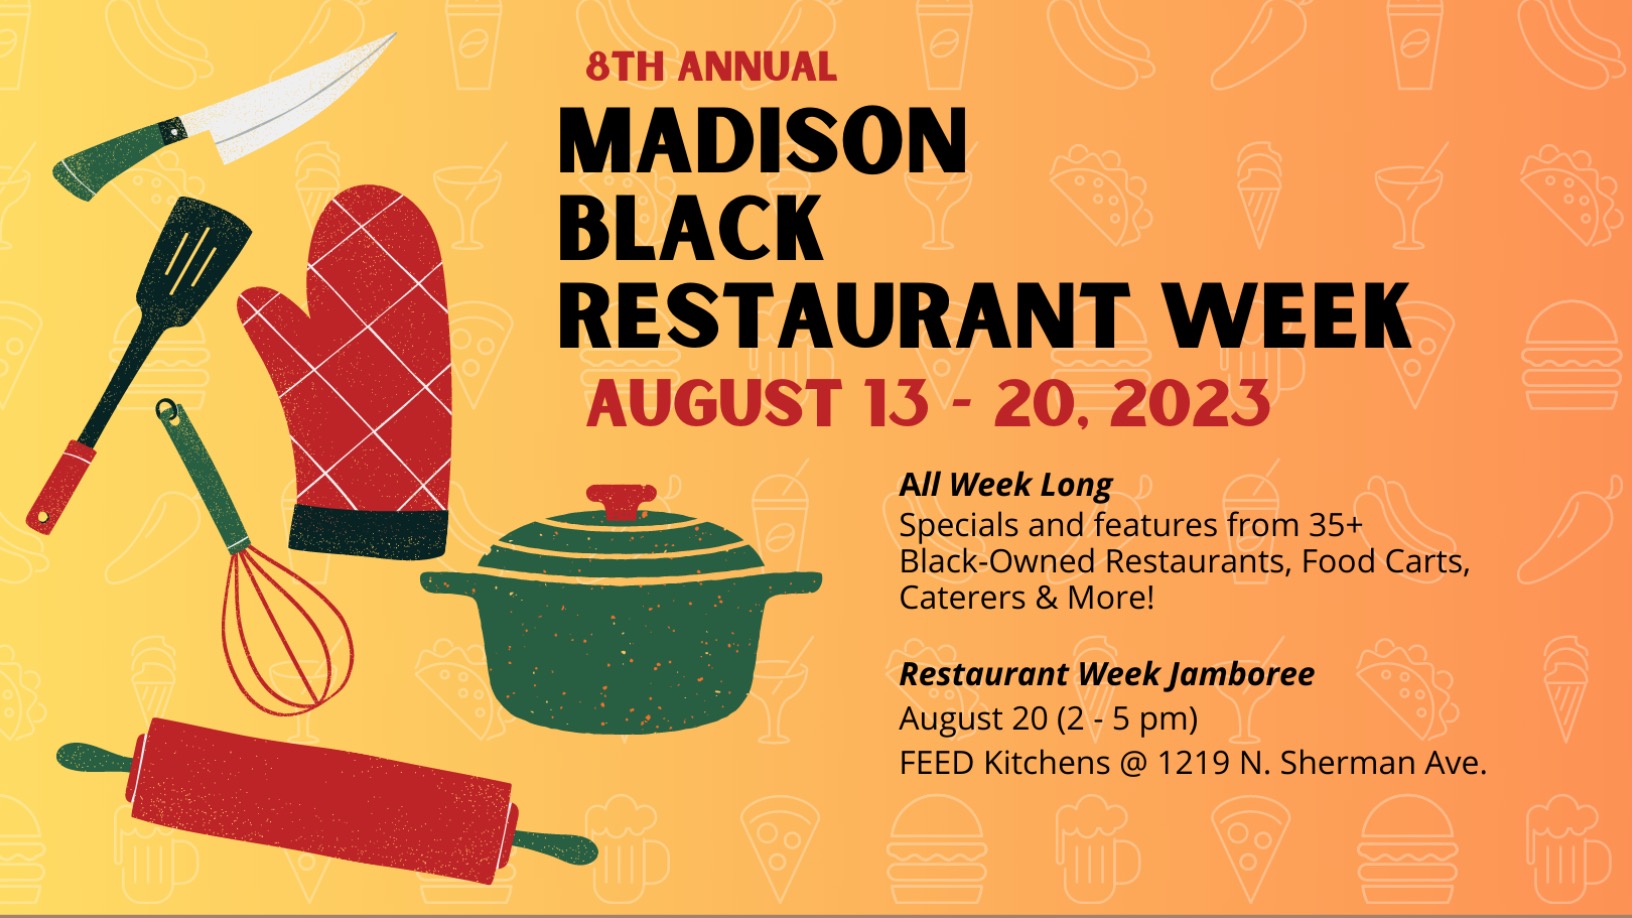 Black Restaurant Week 2023